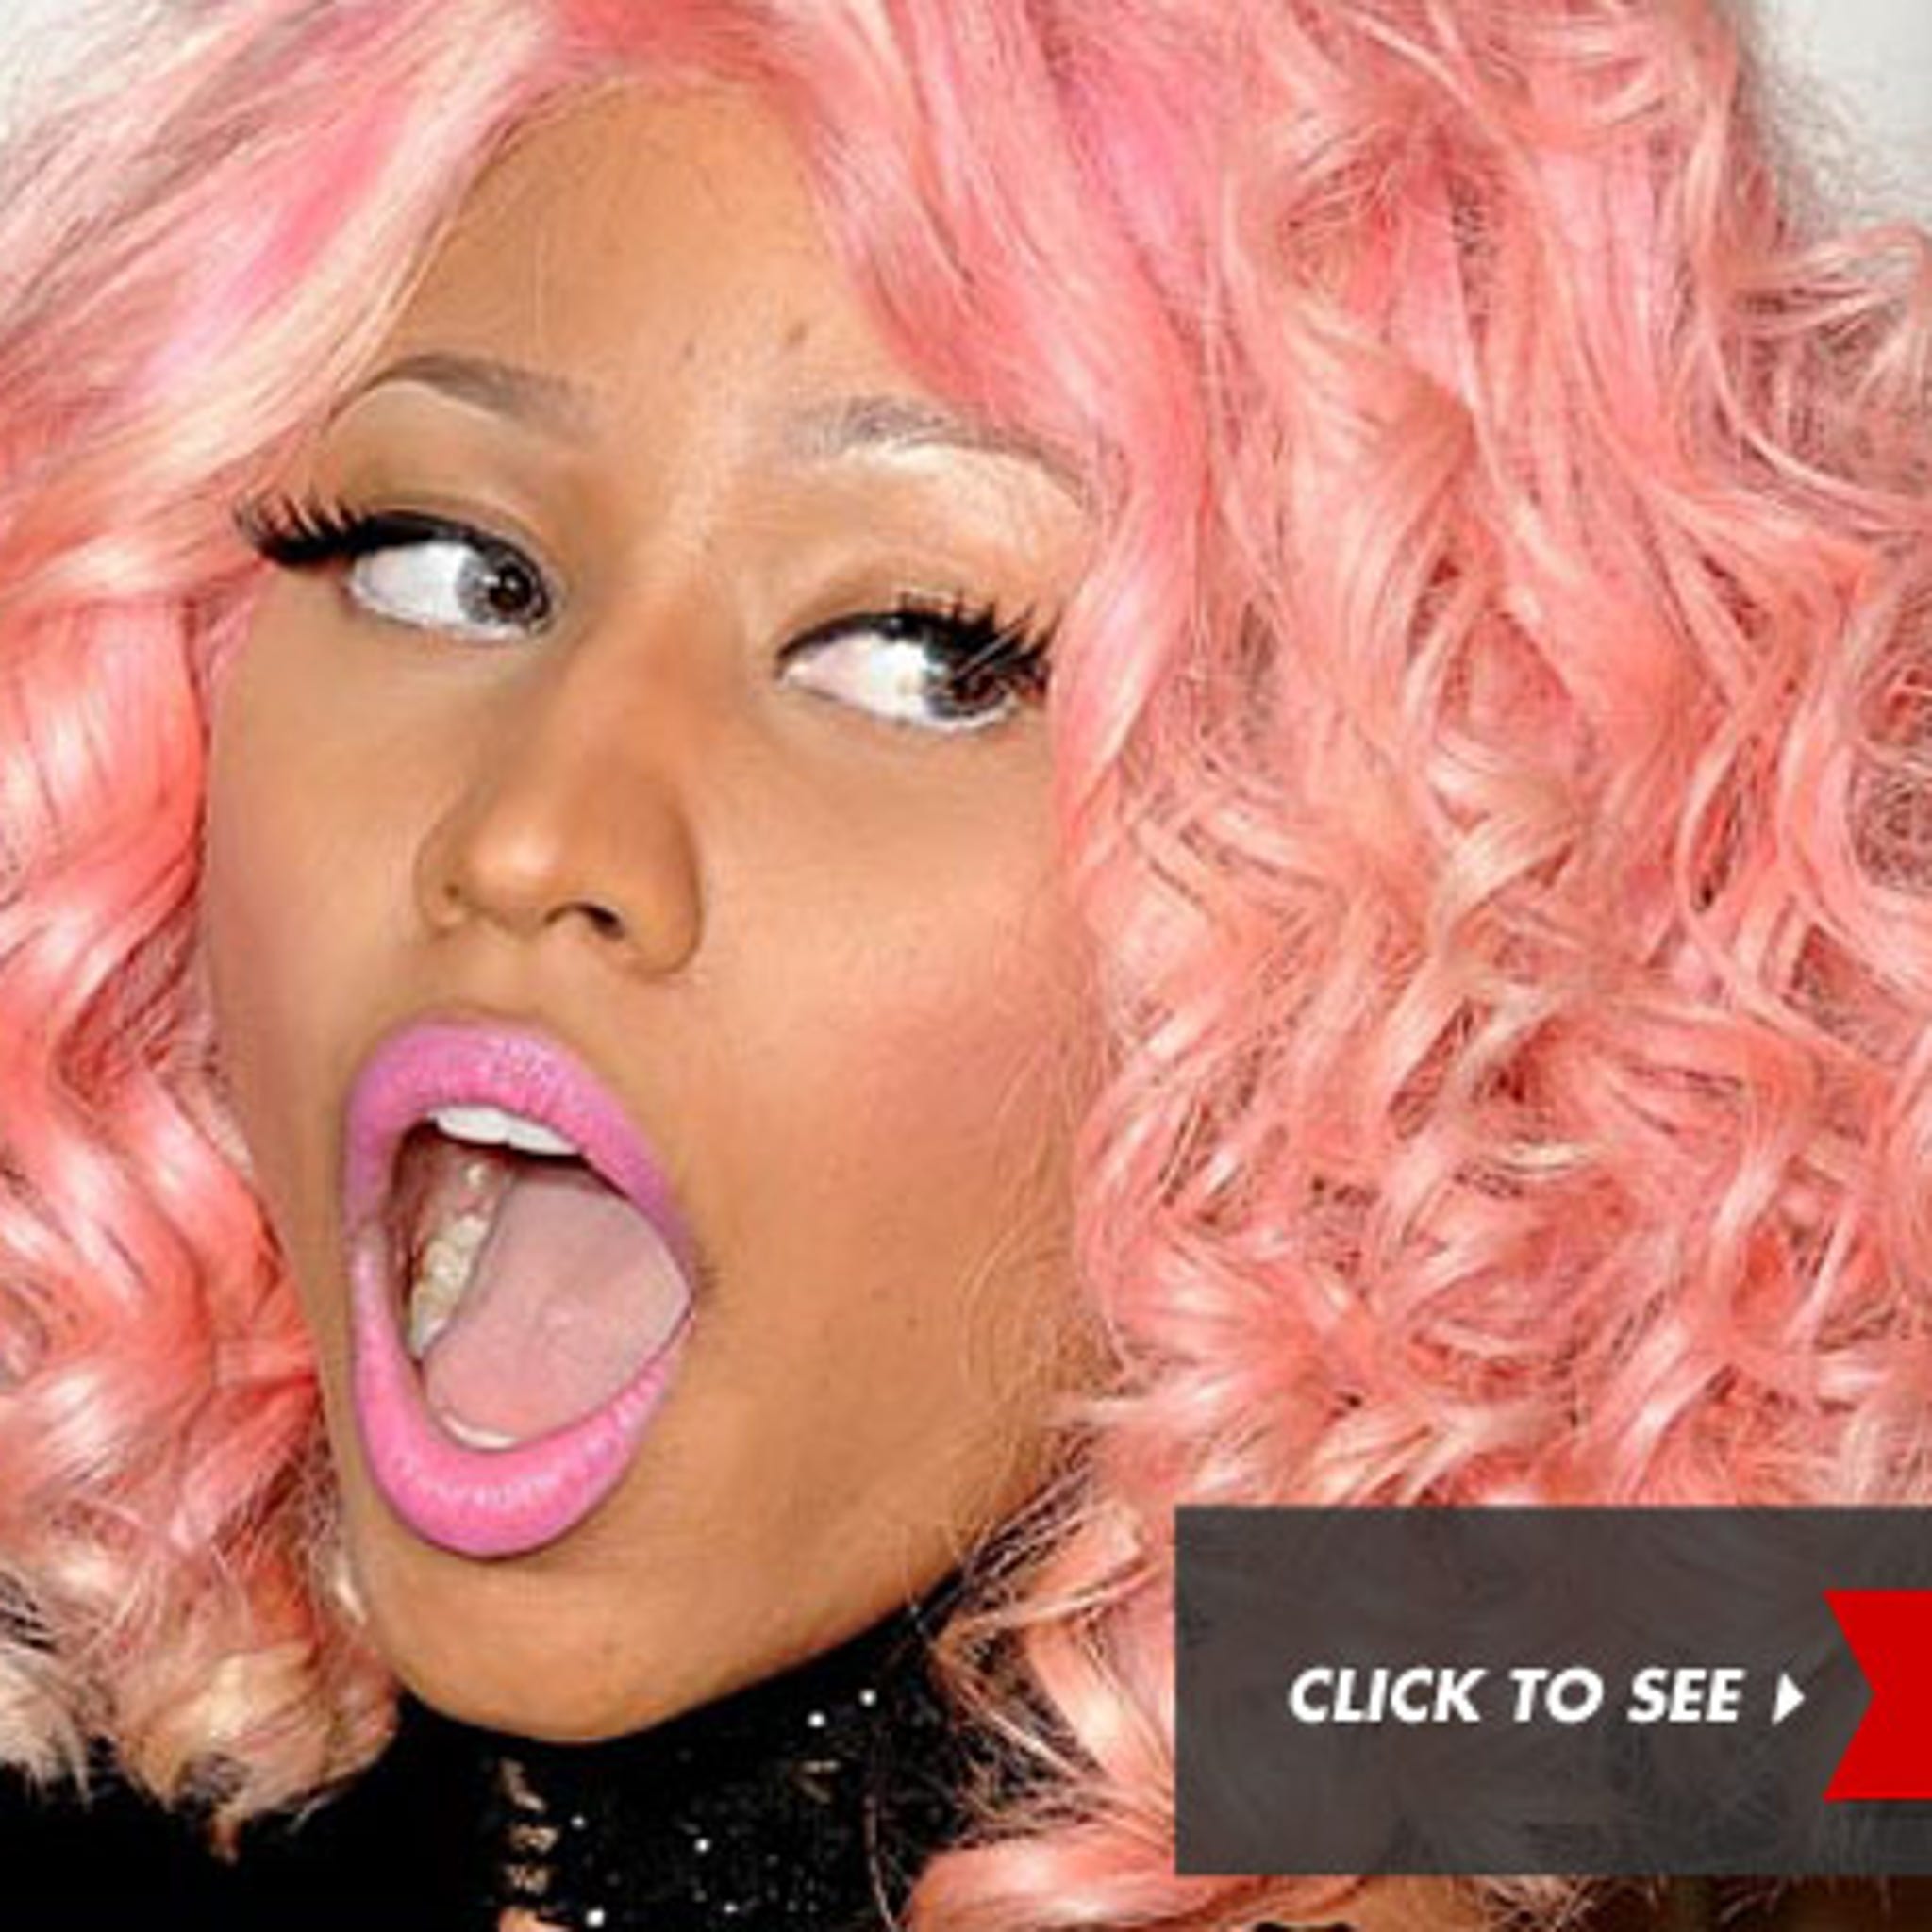 Nicky Minaj Porn Down Load - Nicki Minaj -- No Makeup, No Wig! [PHOTO]